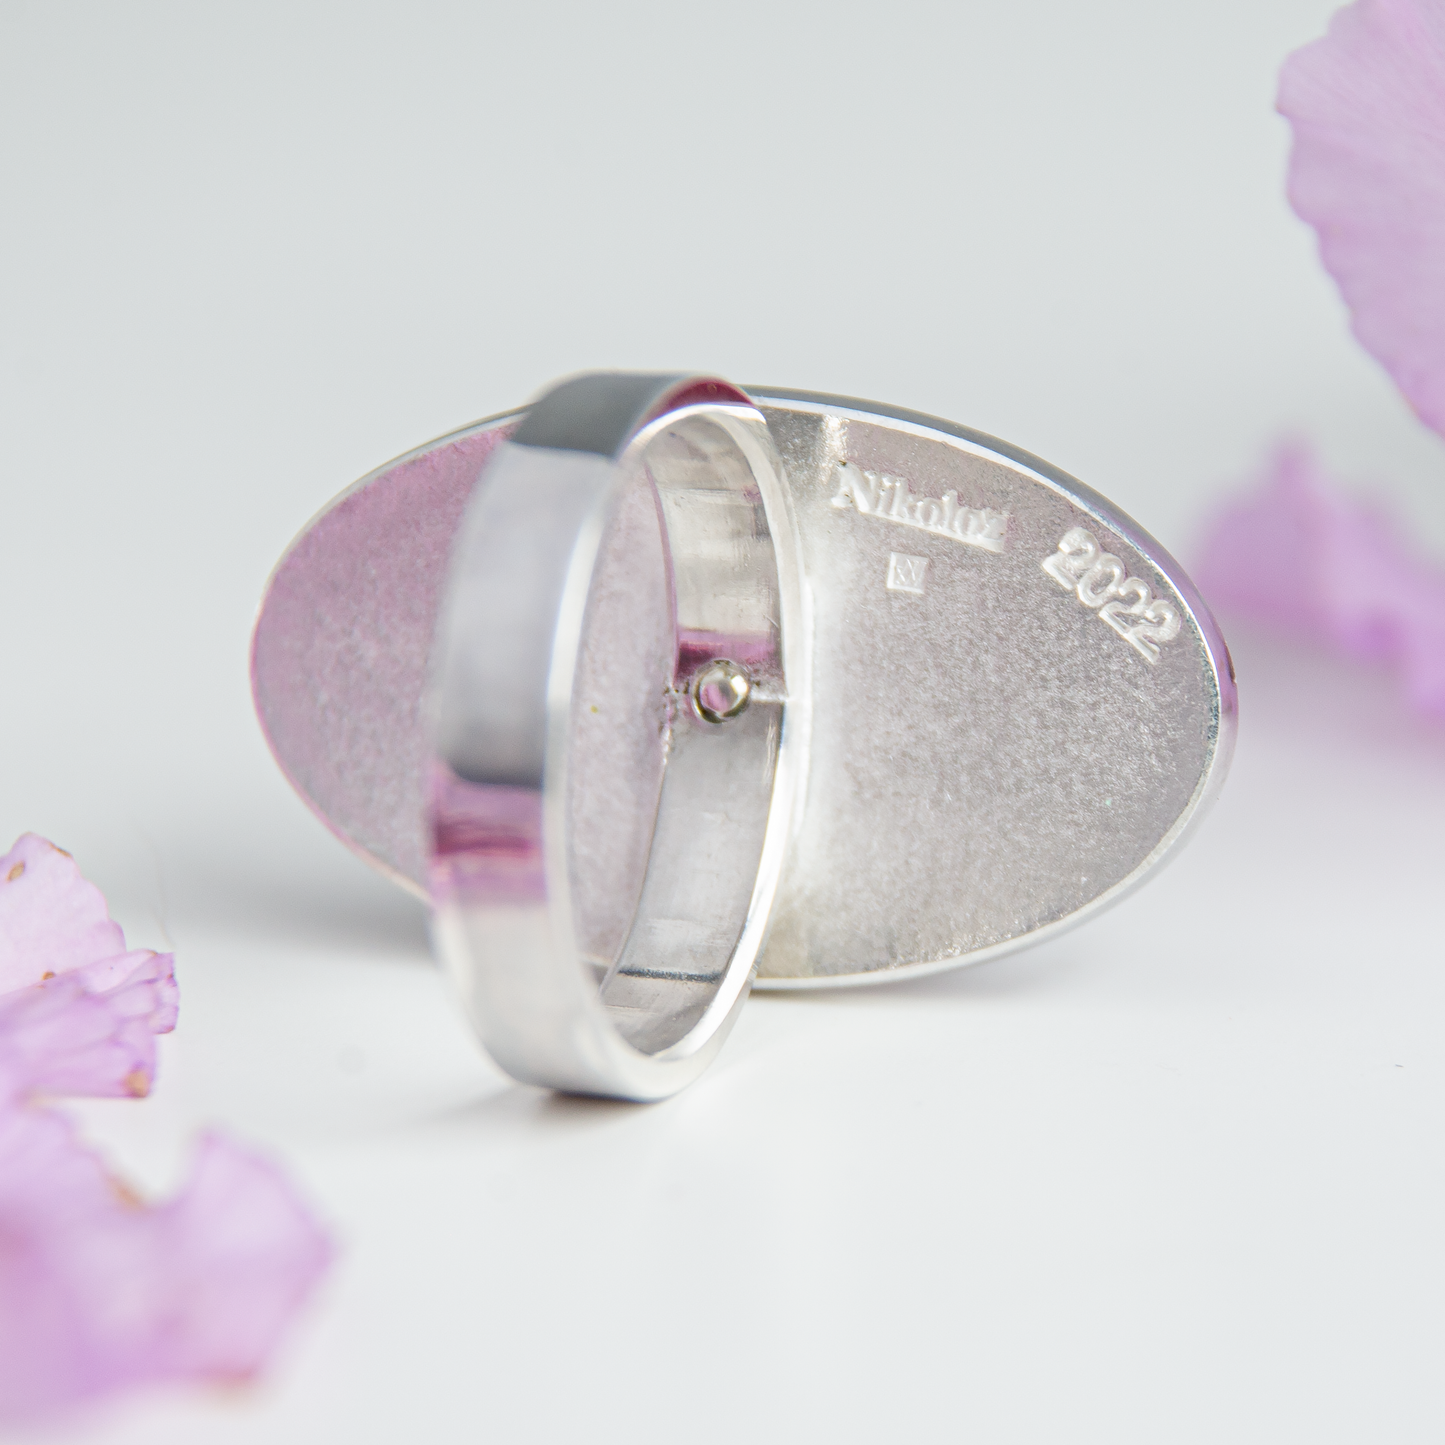 Oval Violet Rose Cloisonné Enamel Ring With Amethyst